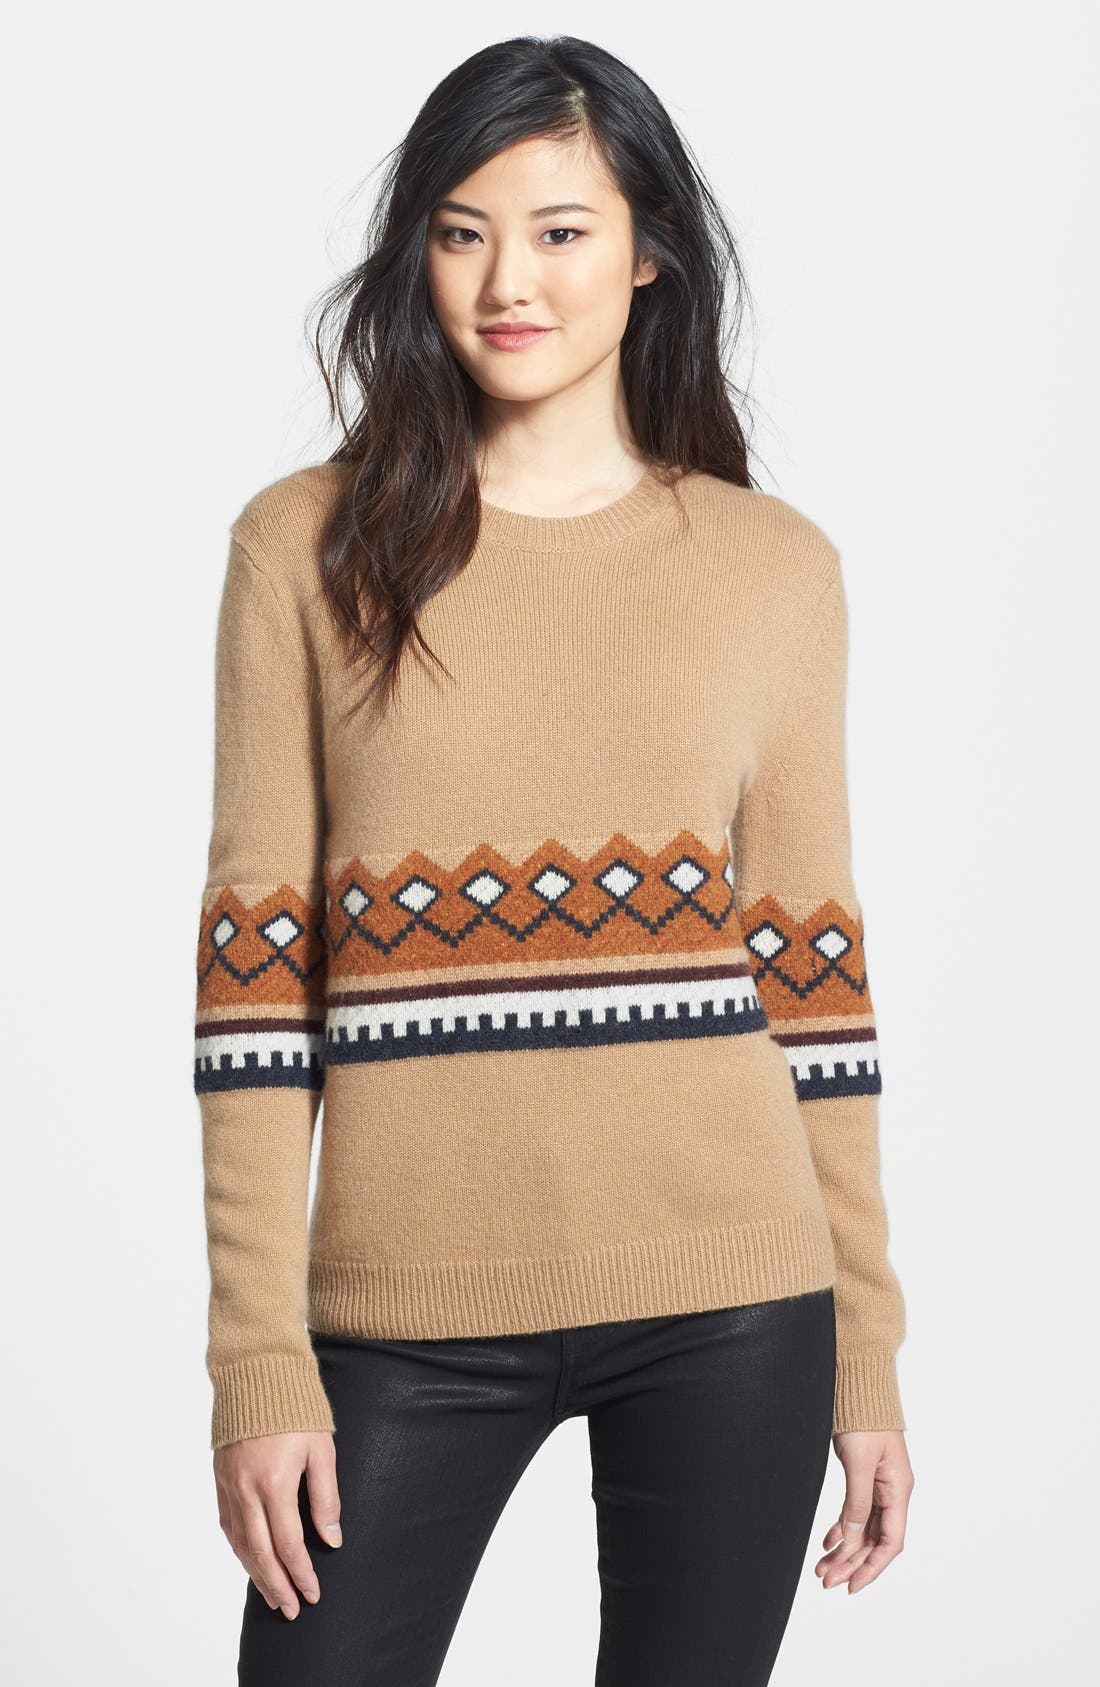 burberry sweater nordstrom